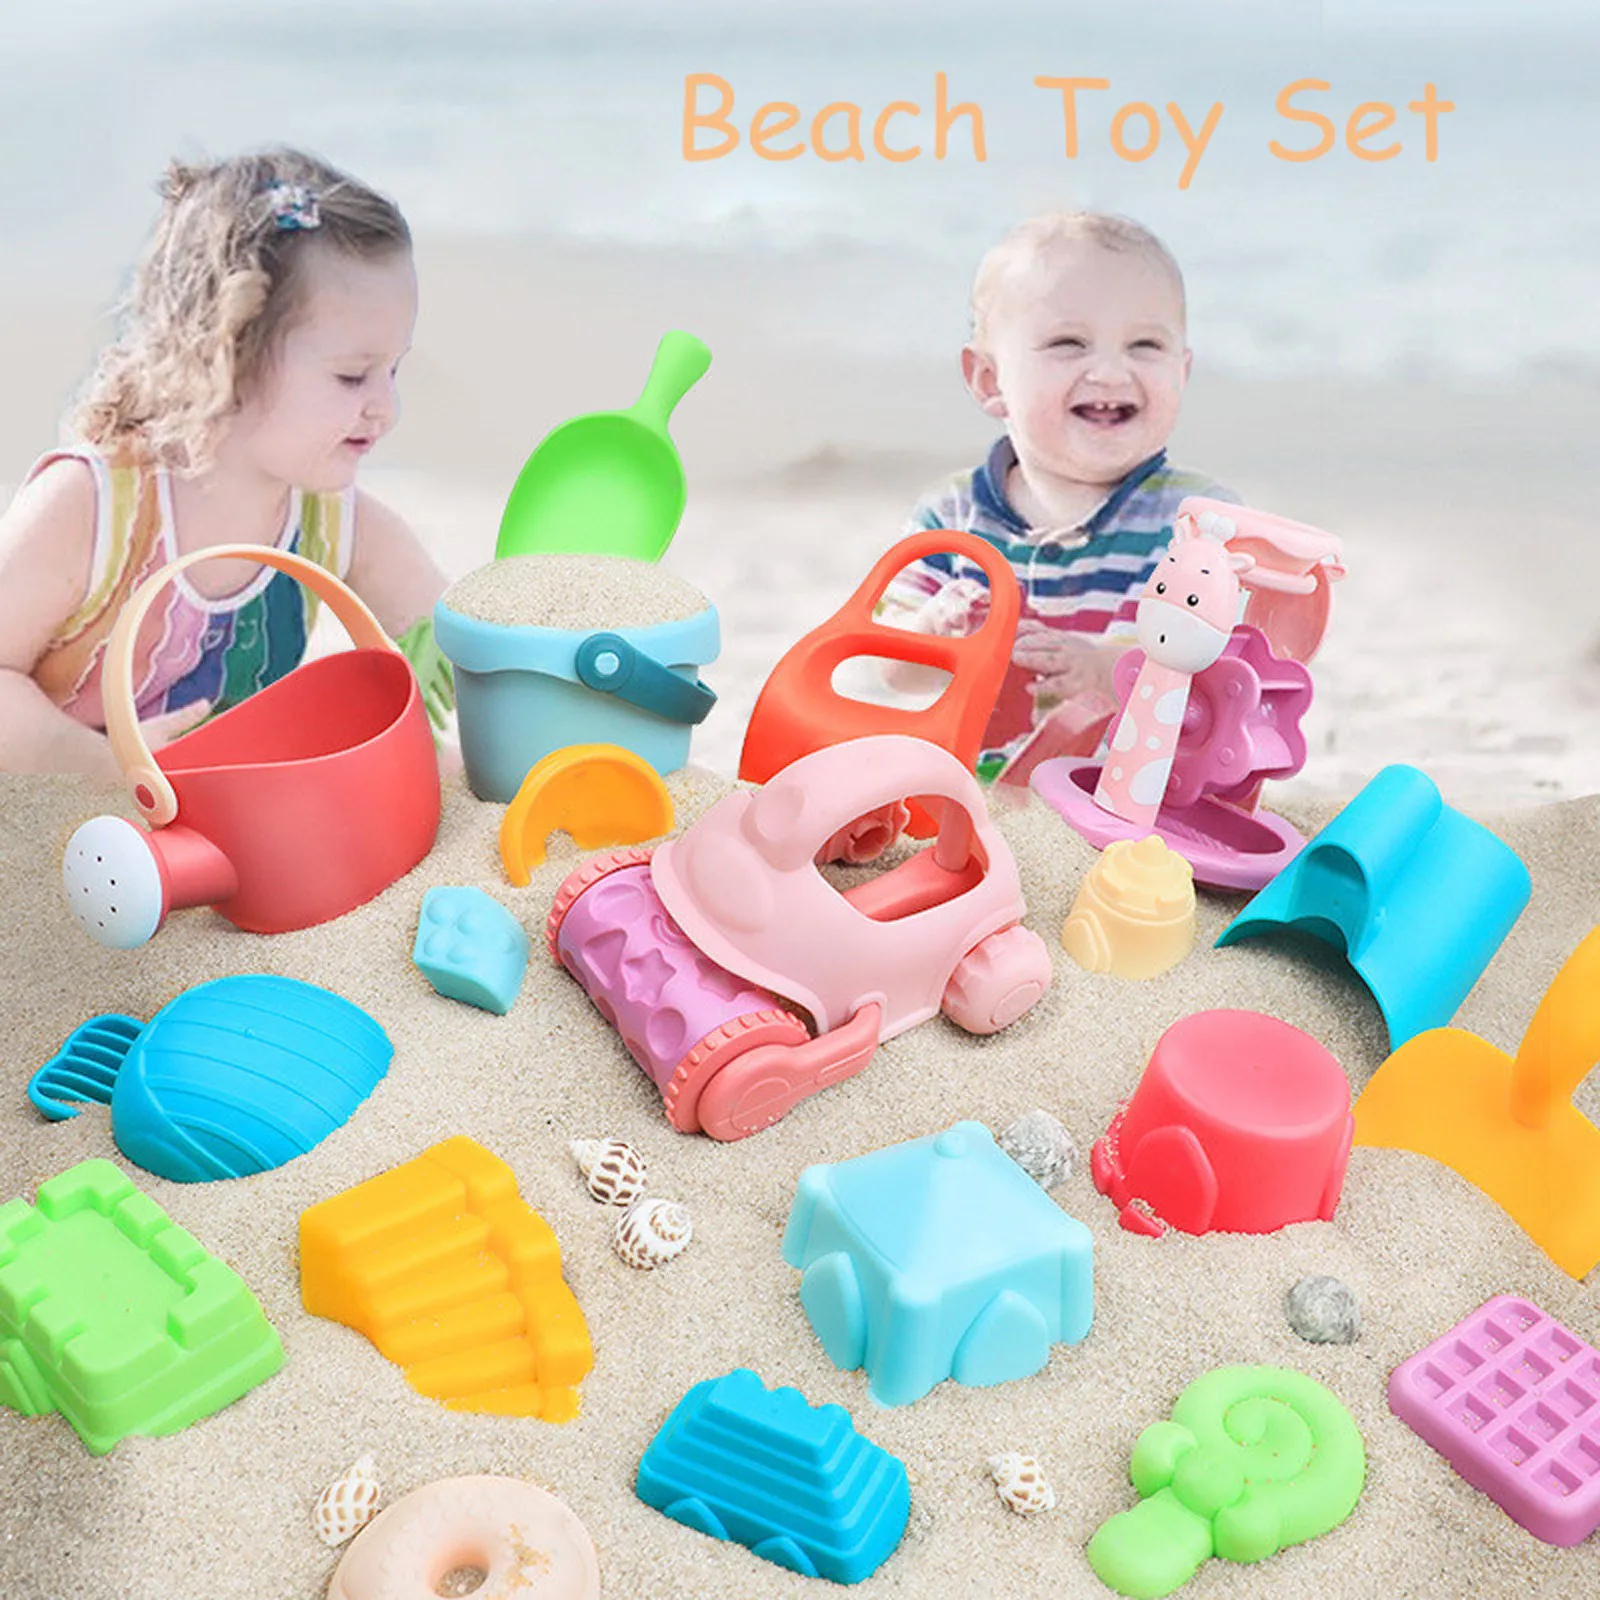 Tional parent child interactive educational toy set outdoor toys sandbox set beach toys thumb200